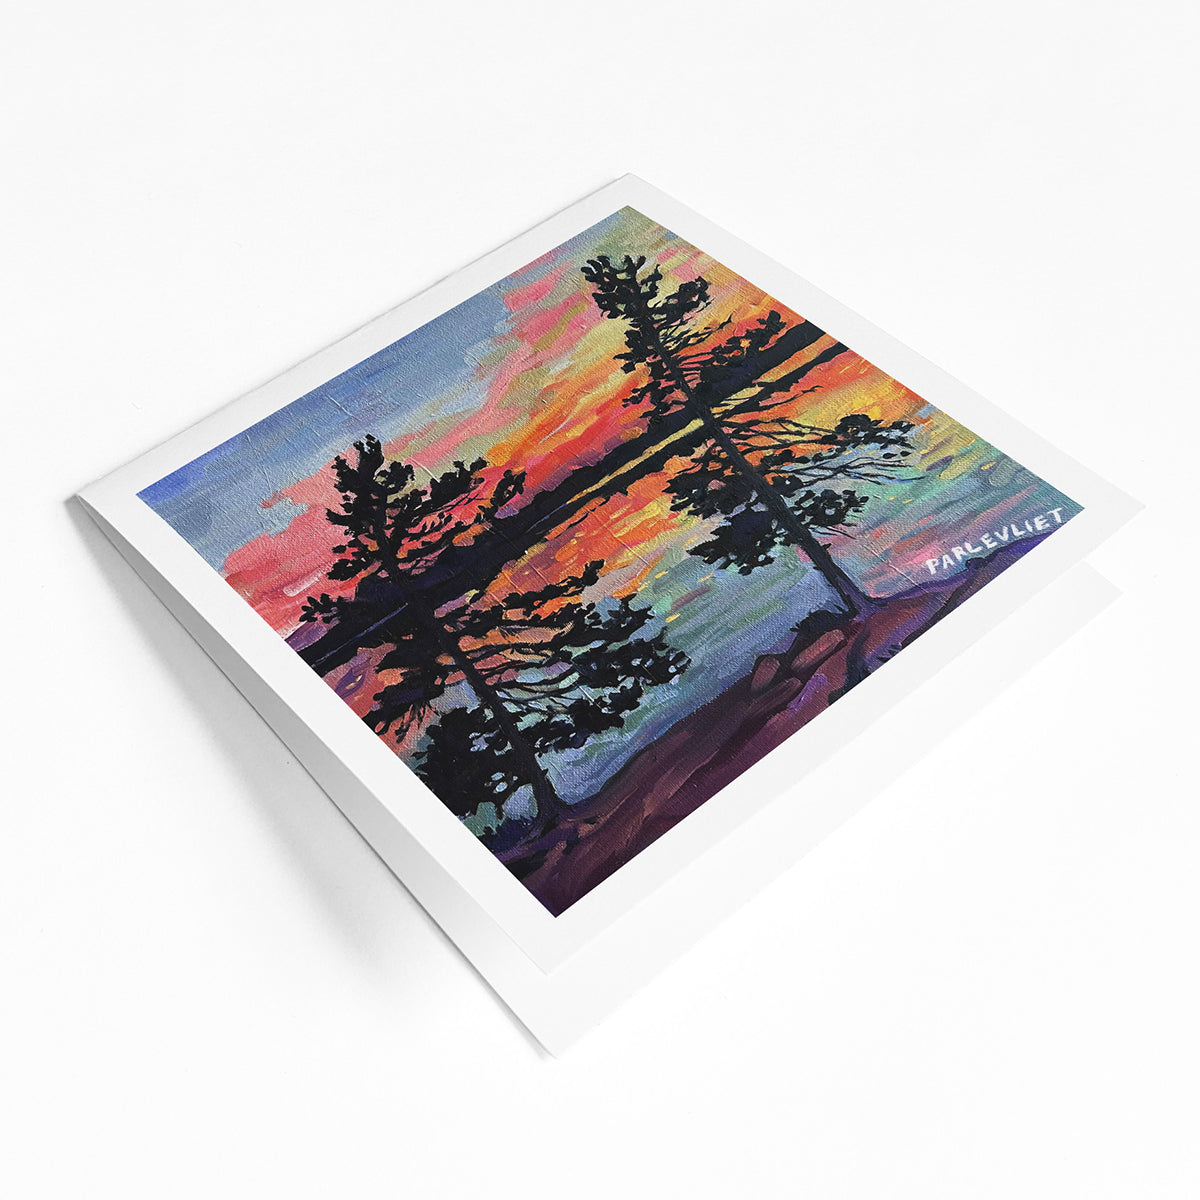 Artist series greeting card bundle (4 pack) - WWF-Canada